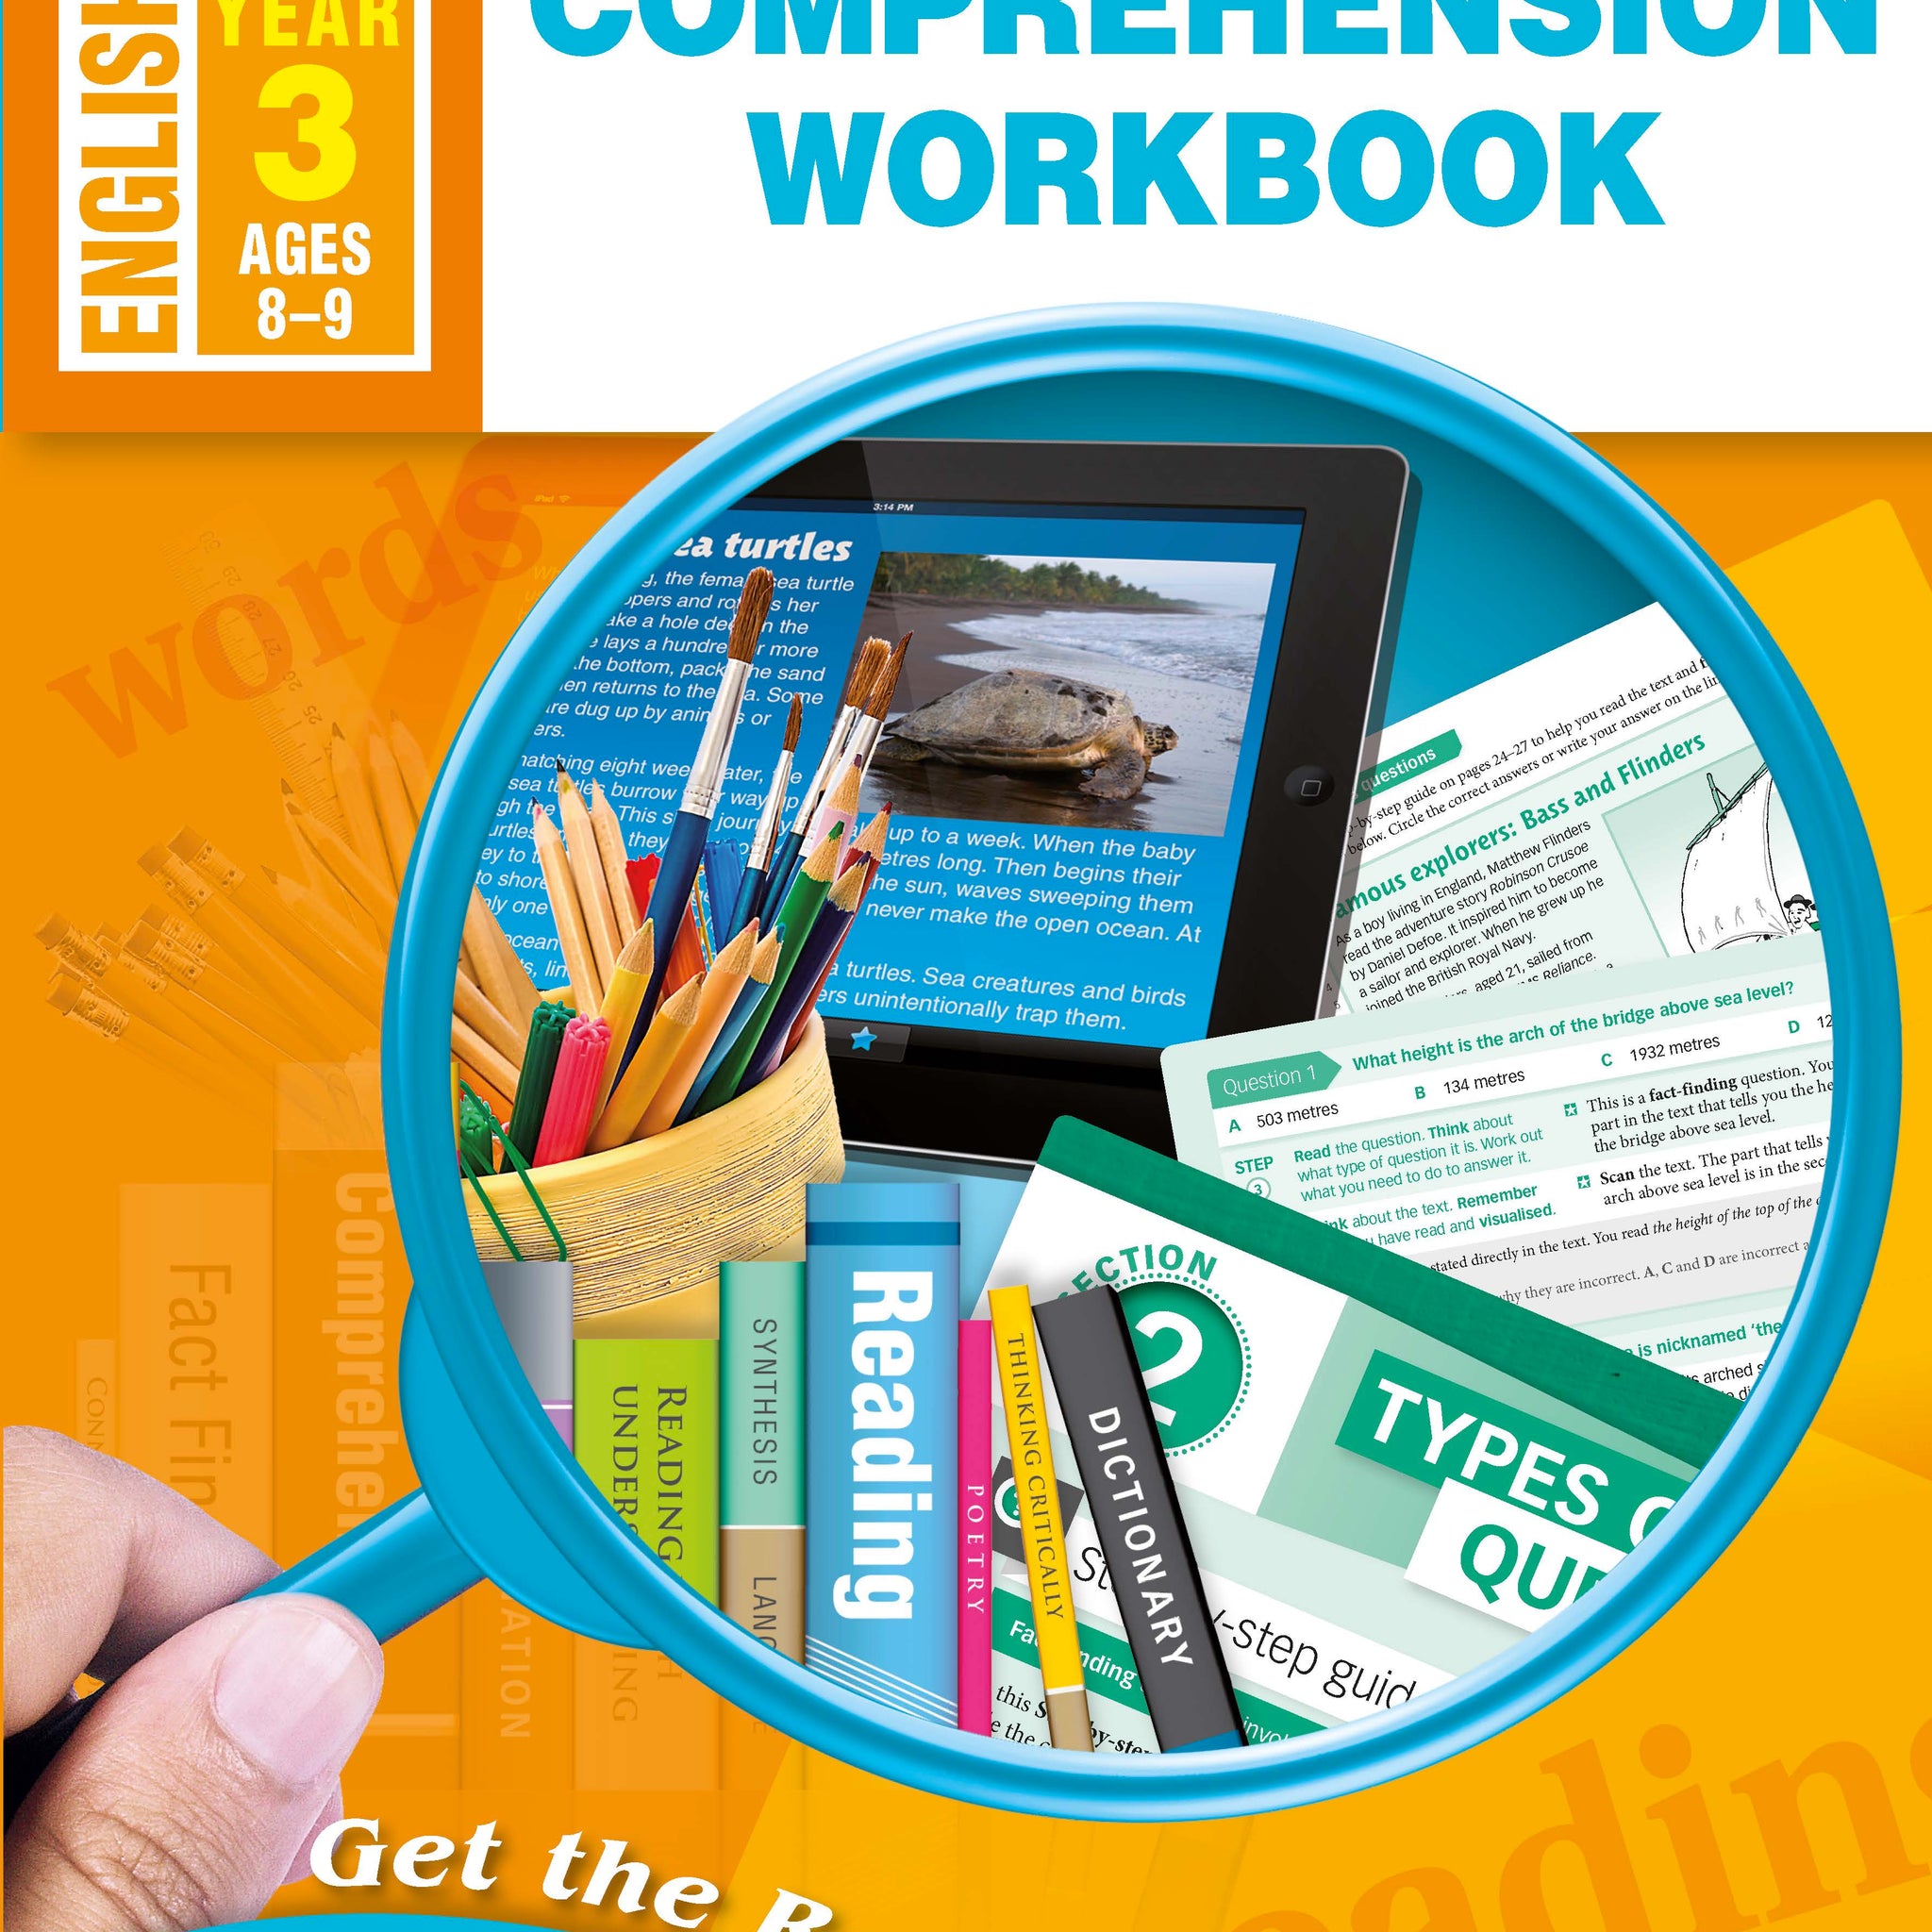 Excel Advanced Skills Workbook: Reading and Comprehension Workbook Year 3